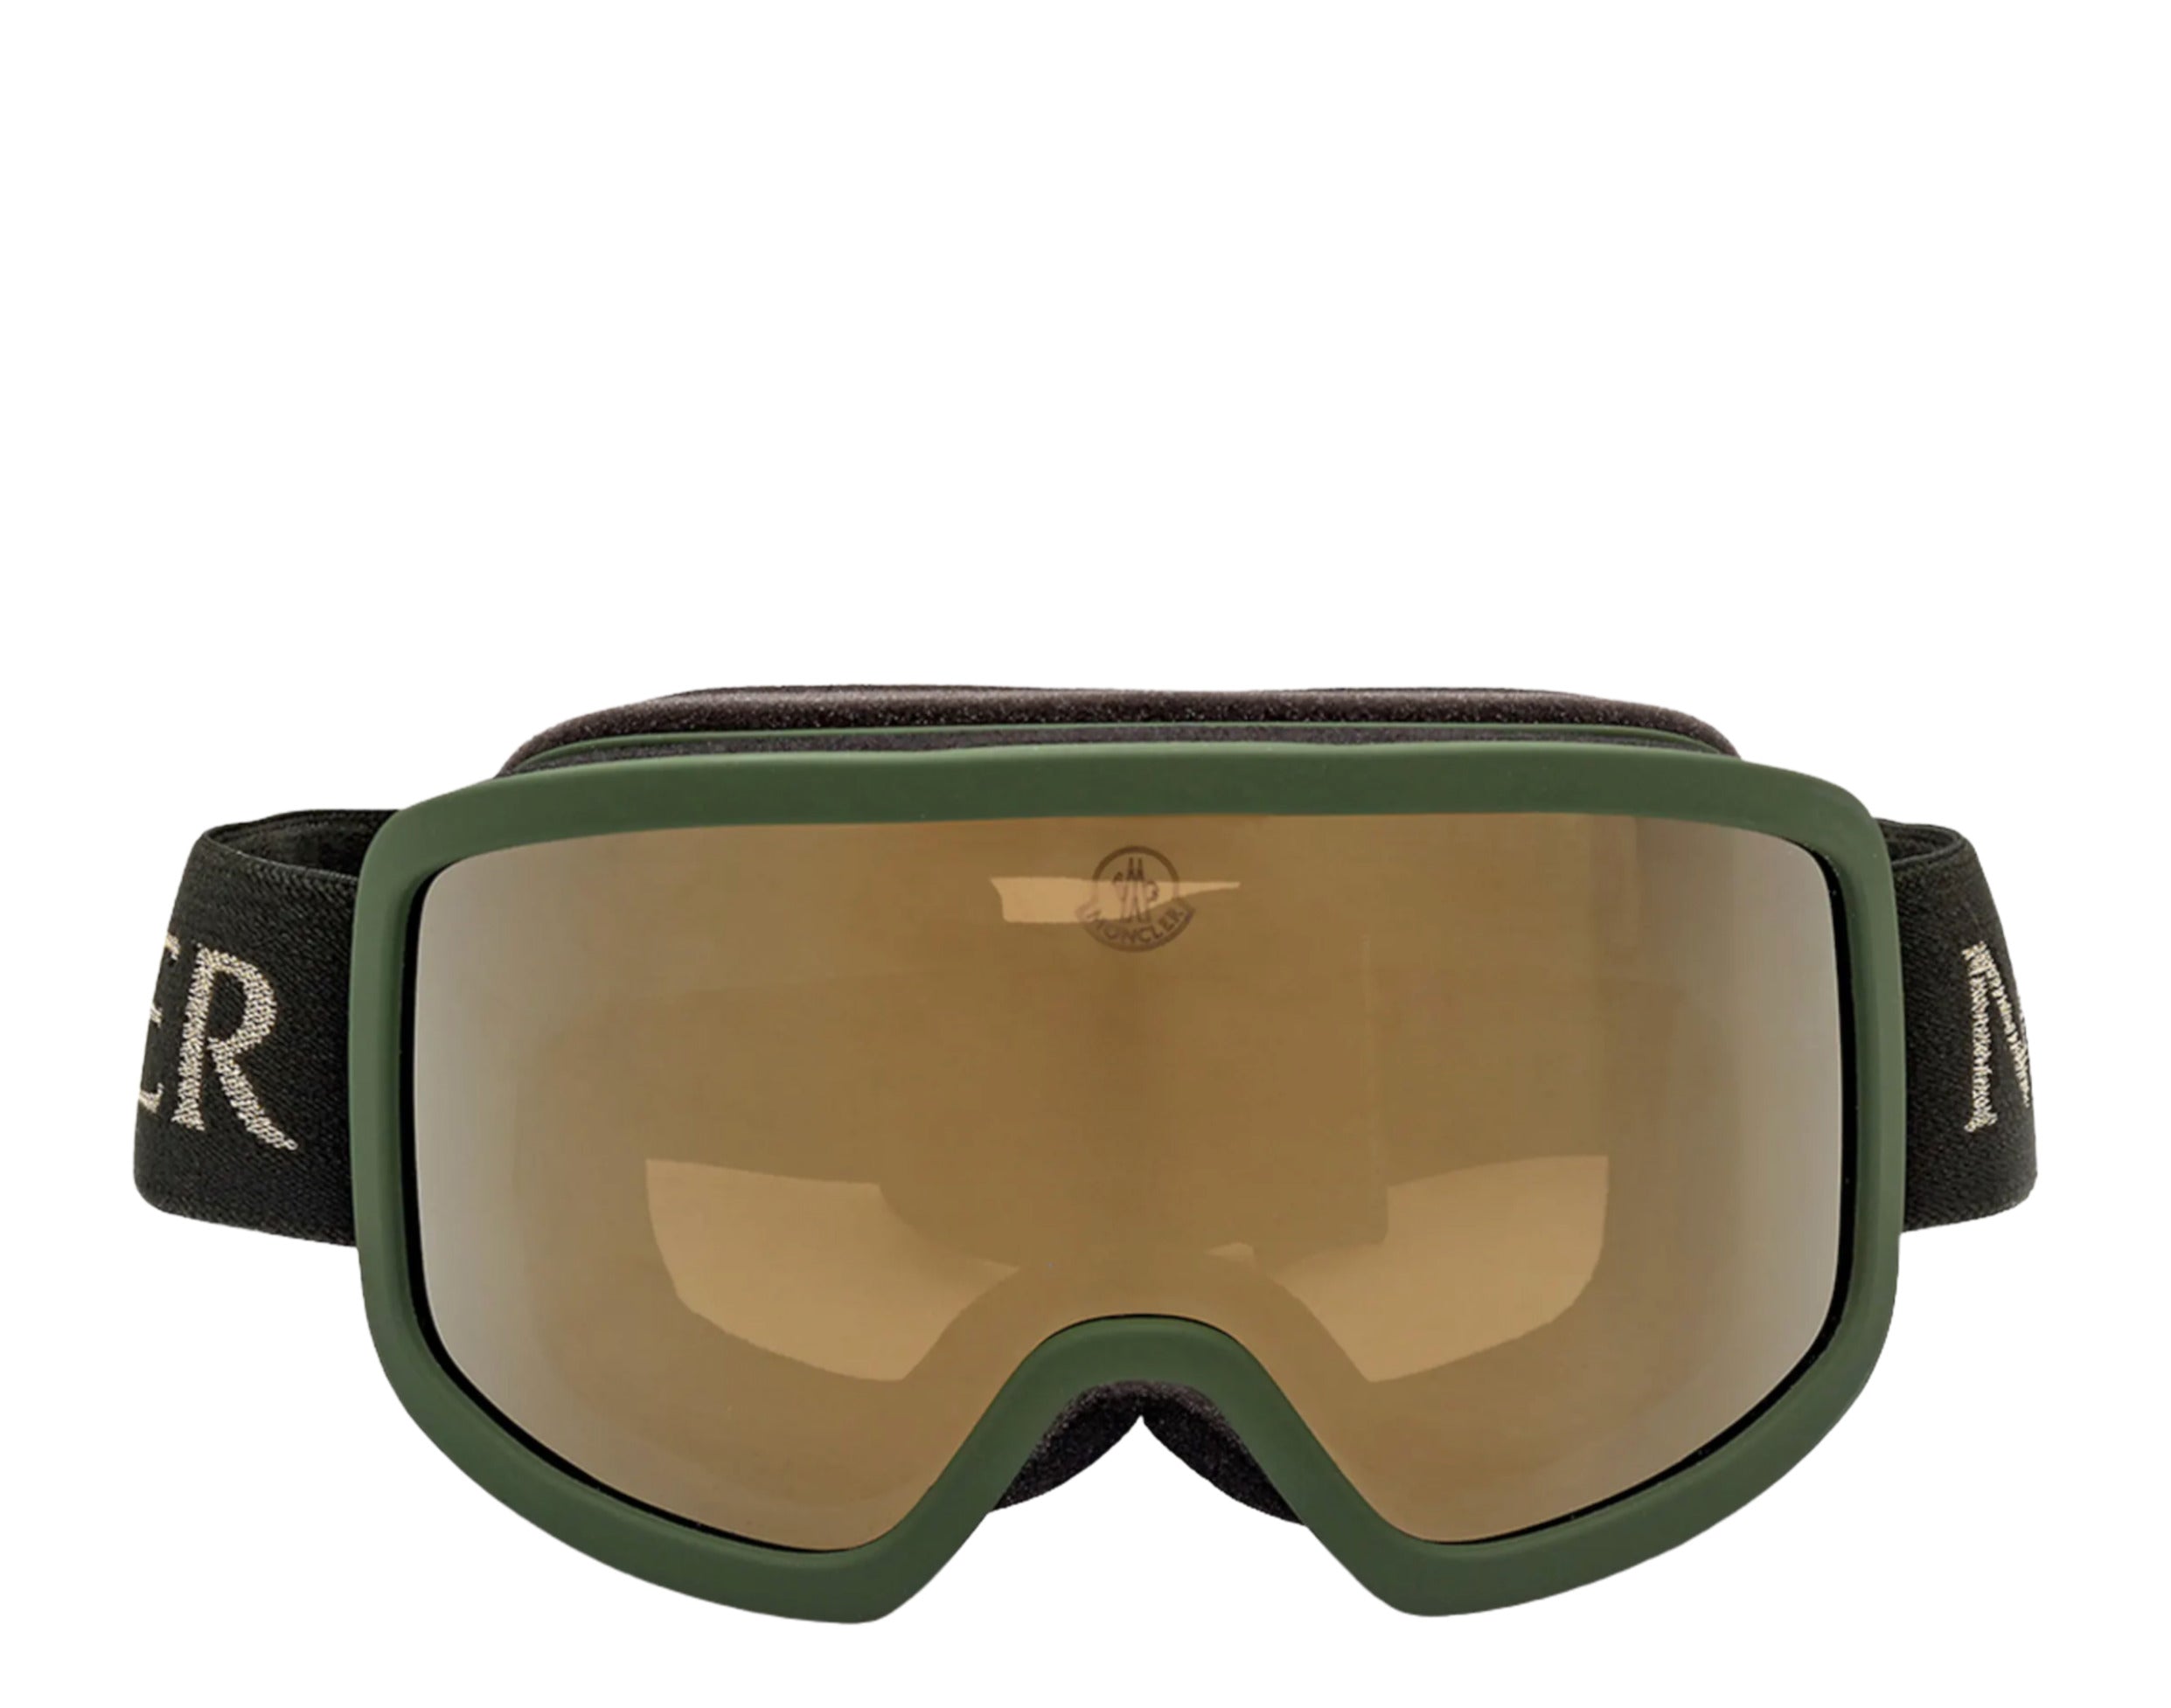 Moncler Terrabeam Ski Goggles - Black